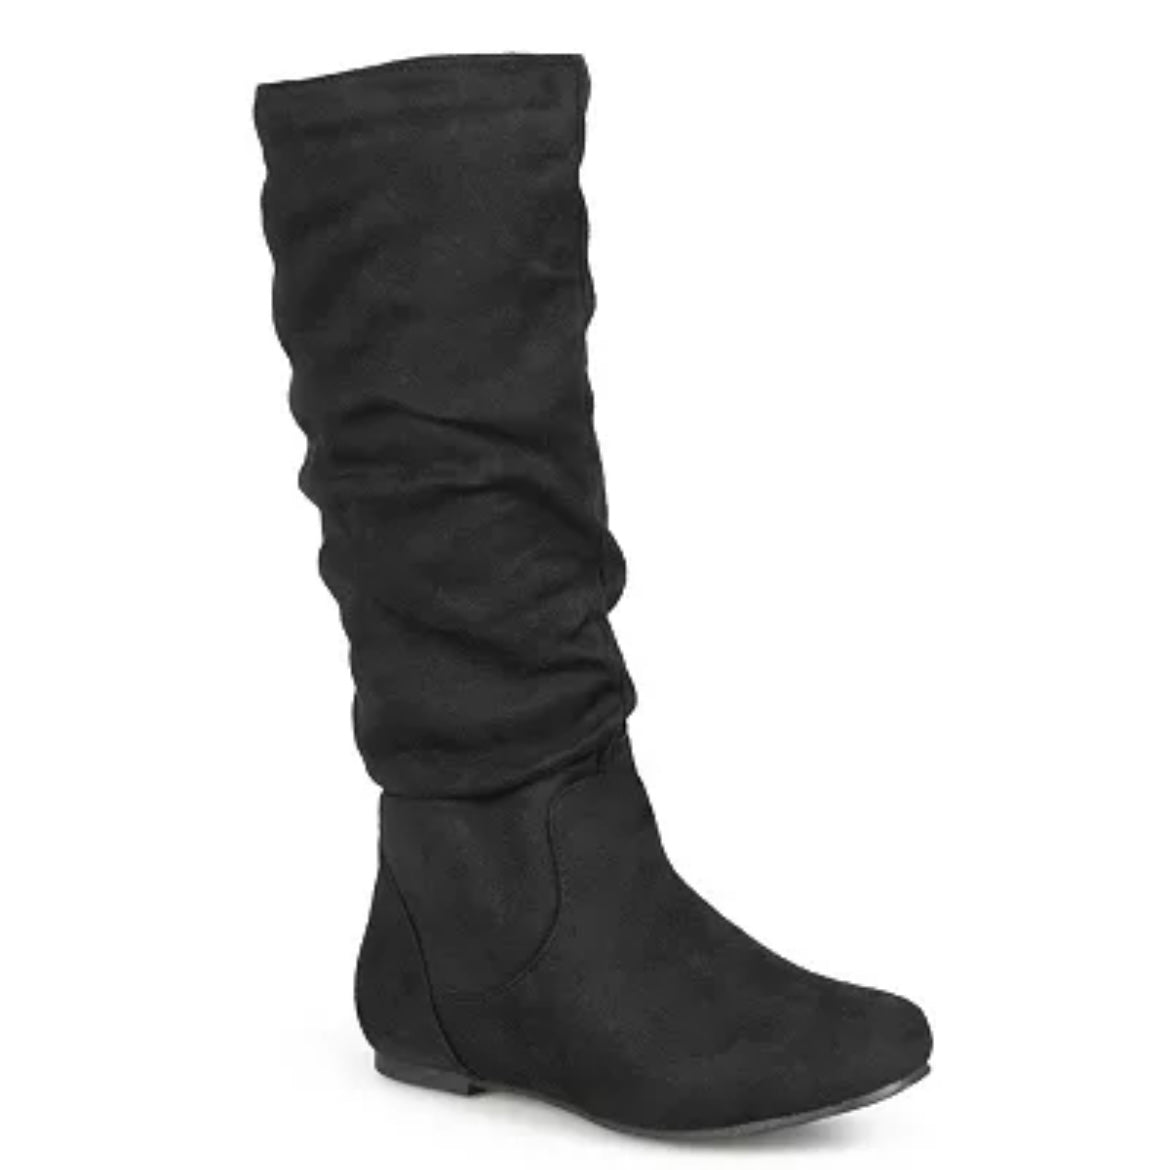 REBECCA-02 Black Fabric Pull On Round Toe Flats Knee High Women's Boots